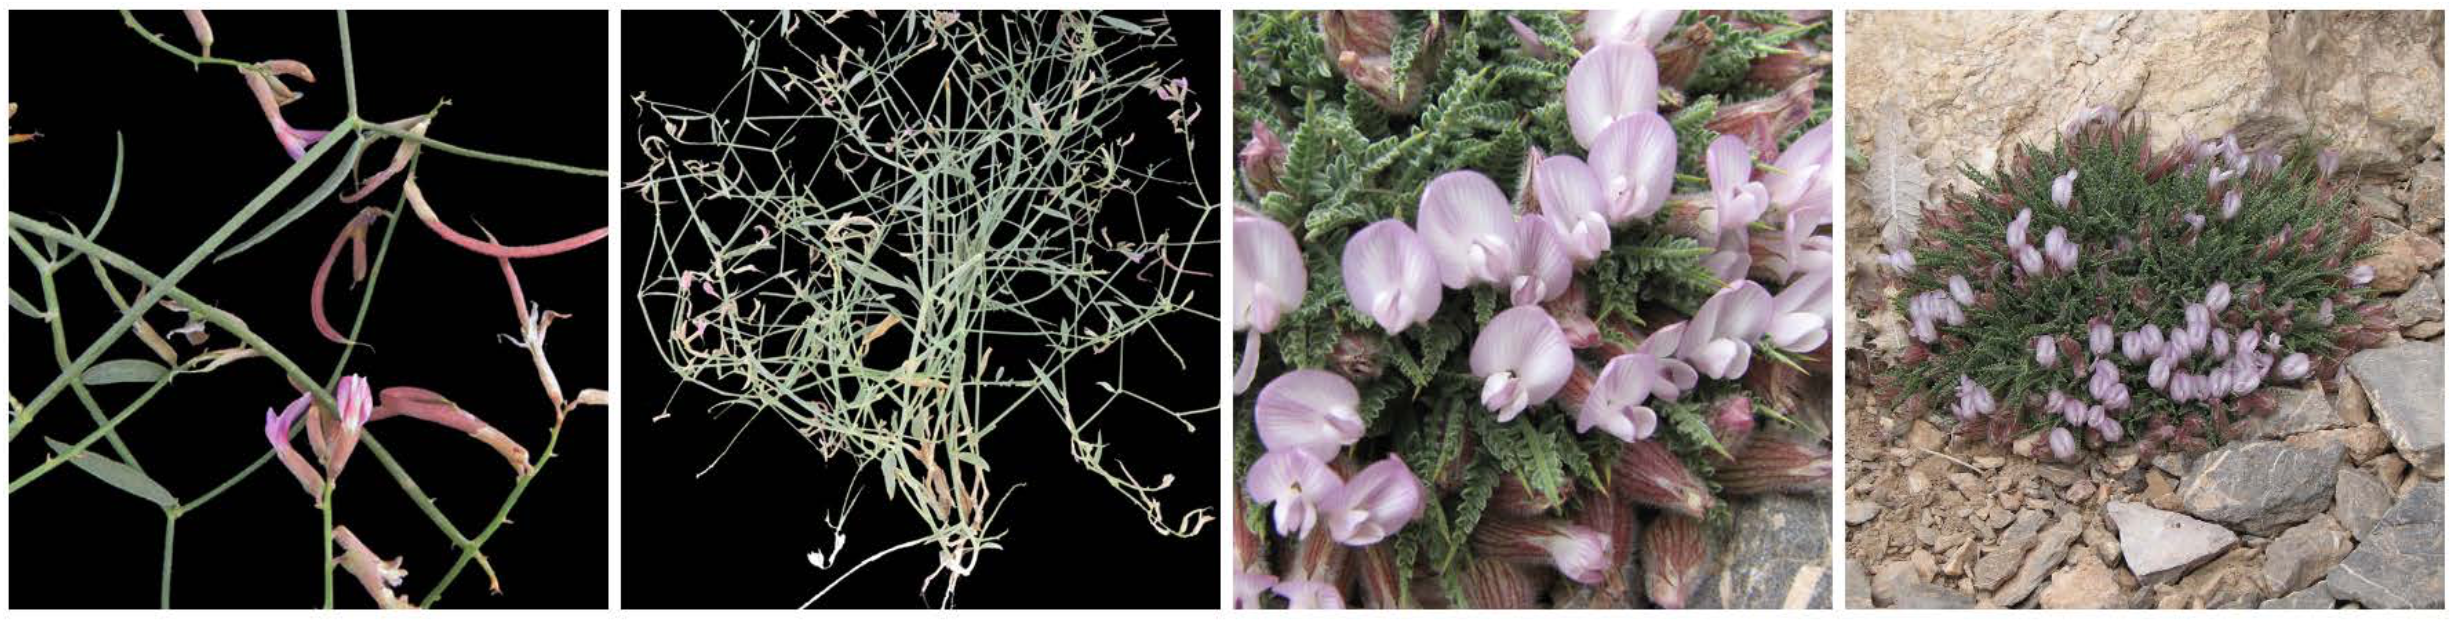 *Astragalus taledensis* (Photos: Huan Zhang) and *Astragalus weisneri* (Photos: Amir H. Pahlevani)